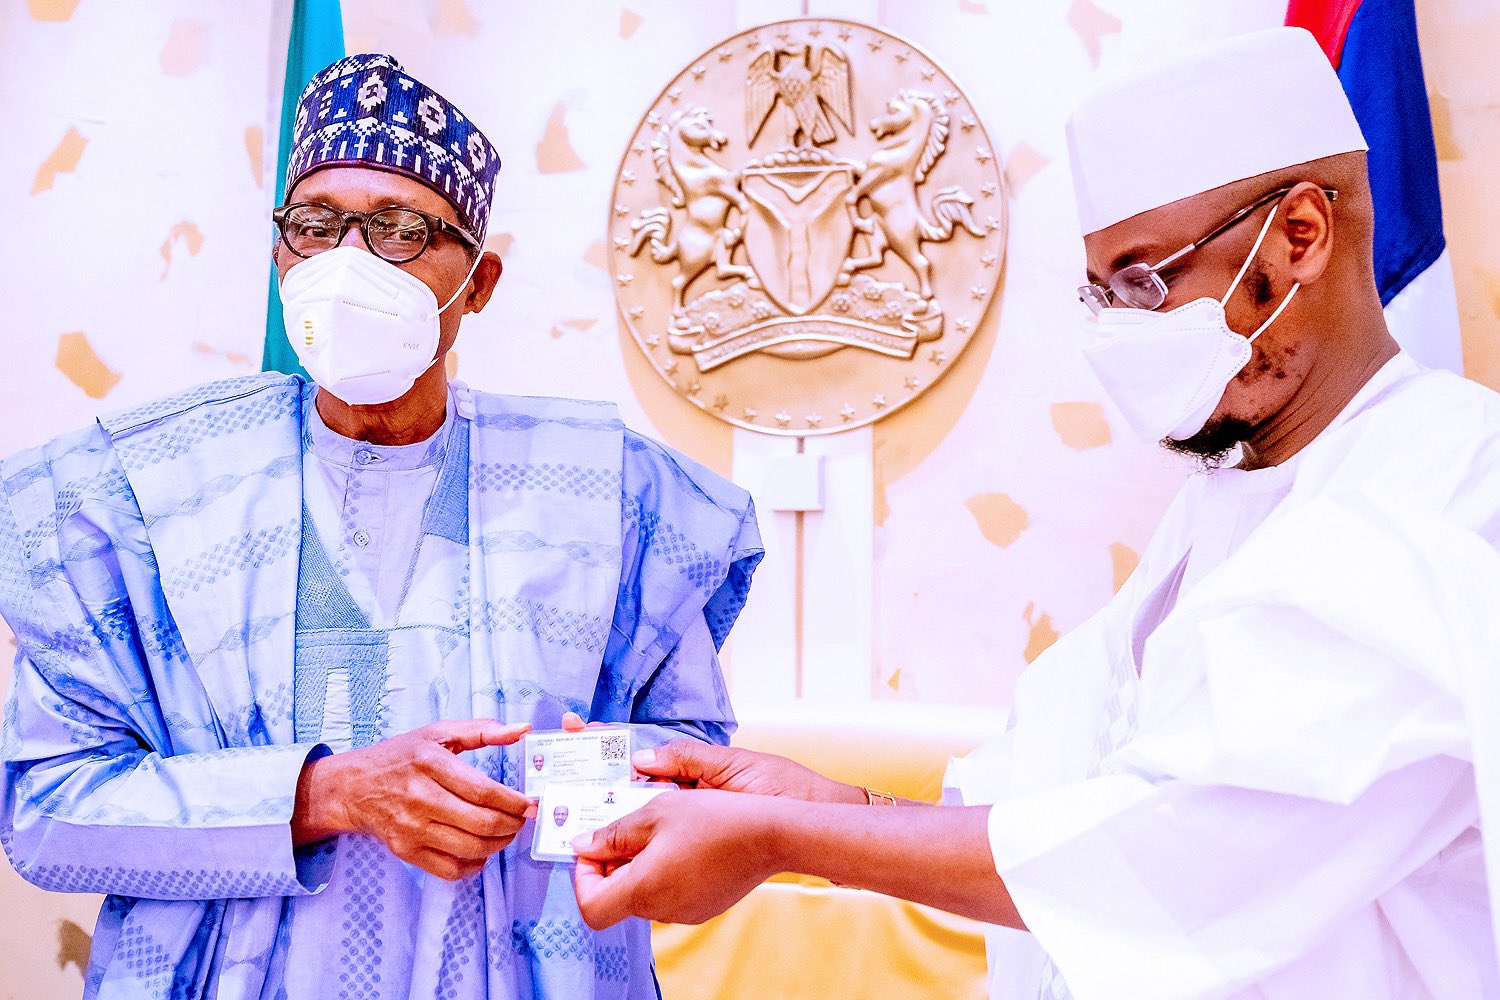 *(Photos) President Buhari Receives NIN Identity Card*